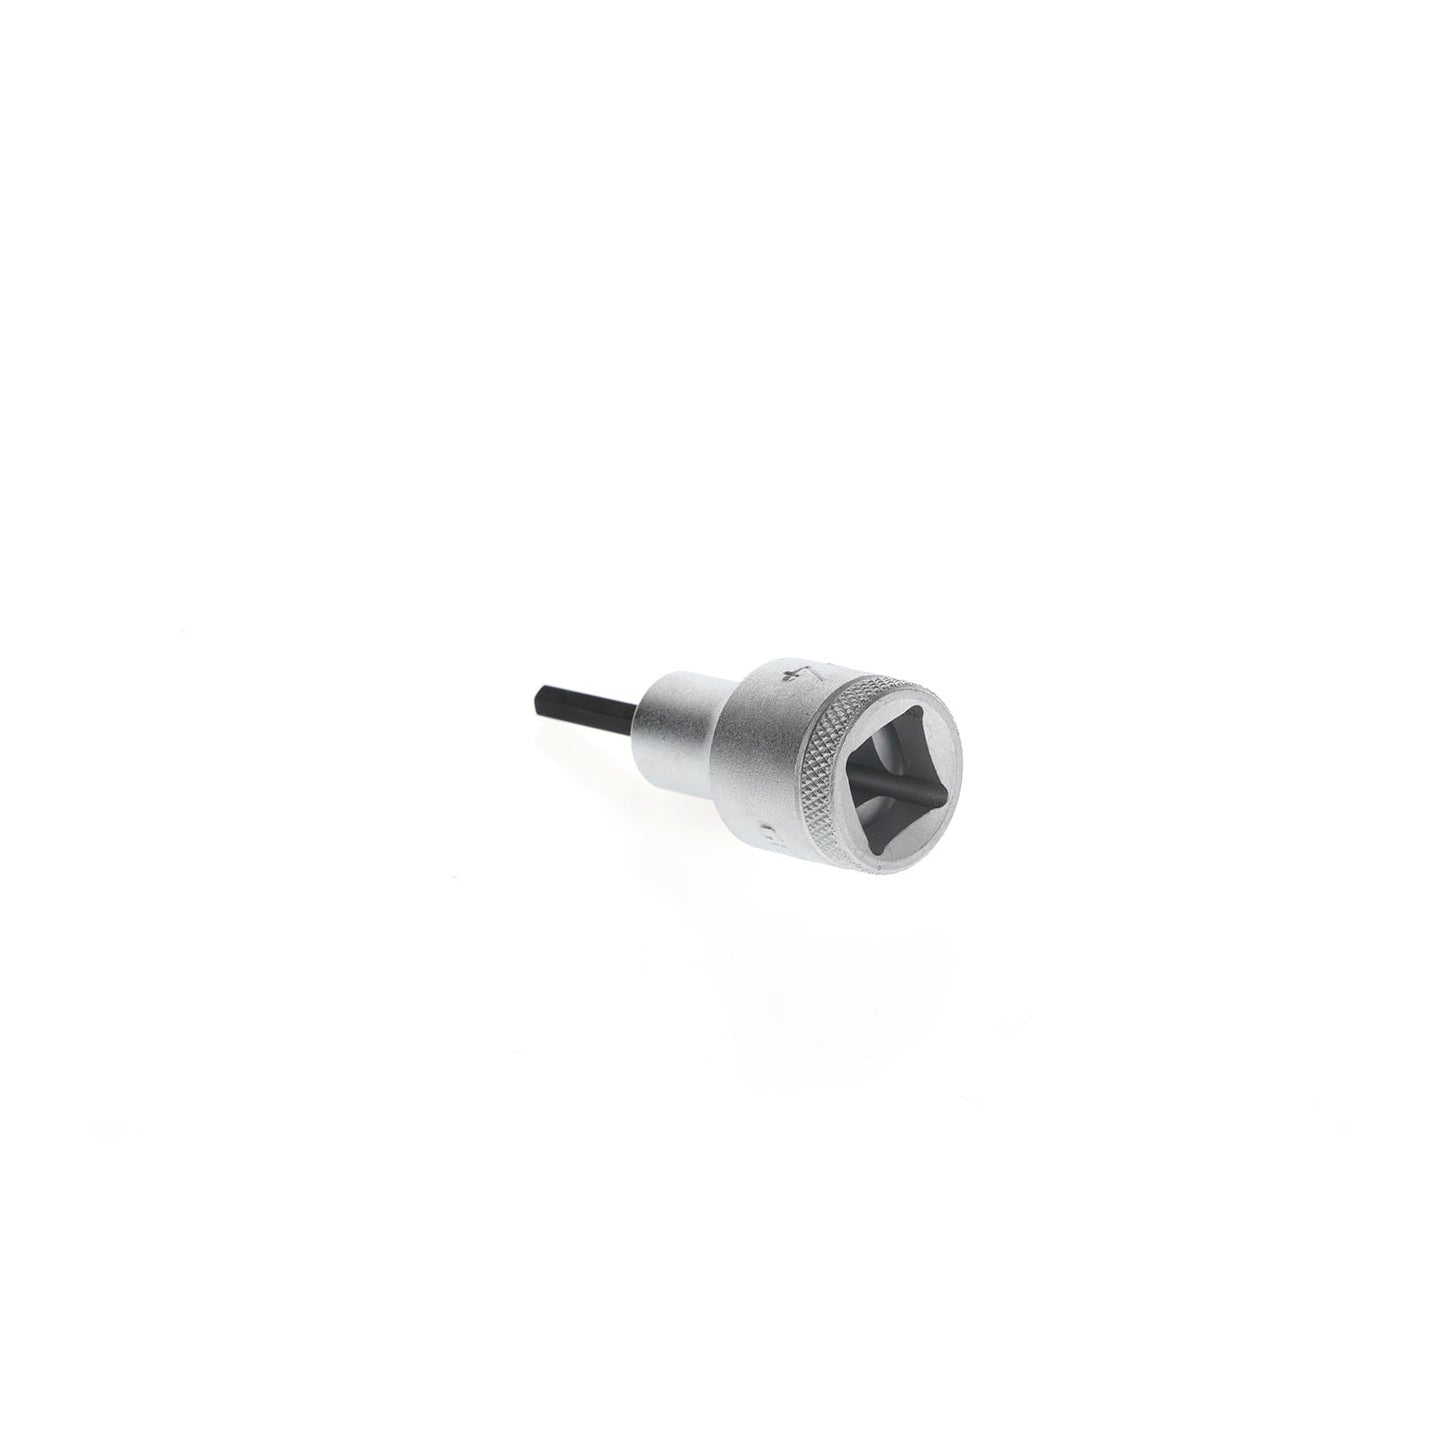 GEDORE IN 19 4 - INBUS® Socket 1/2", 4 mm (6153070)